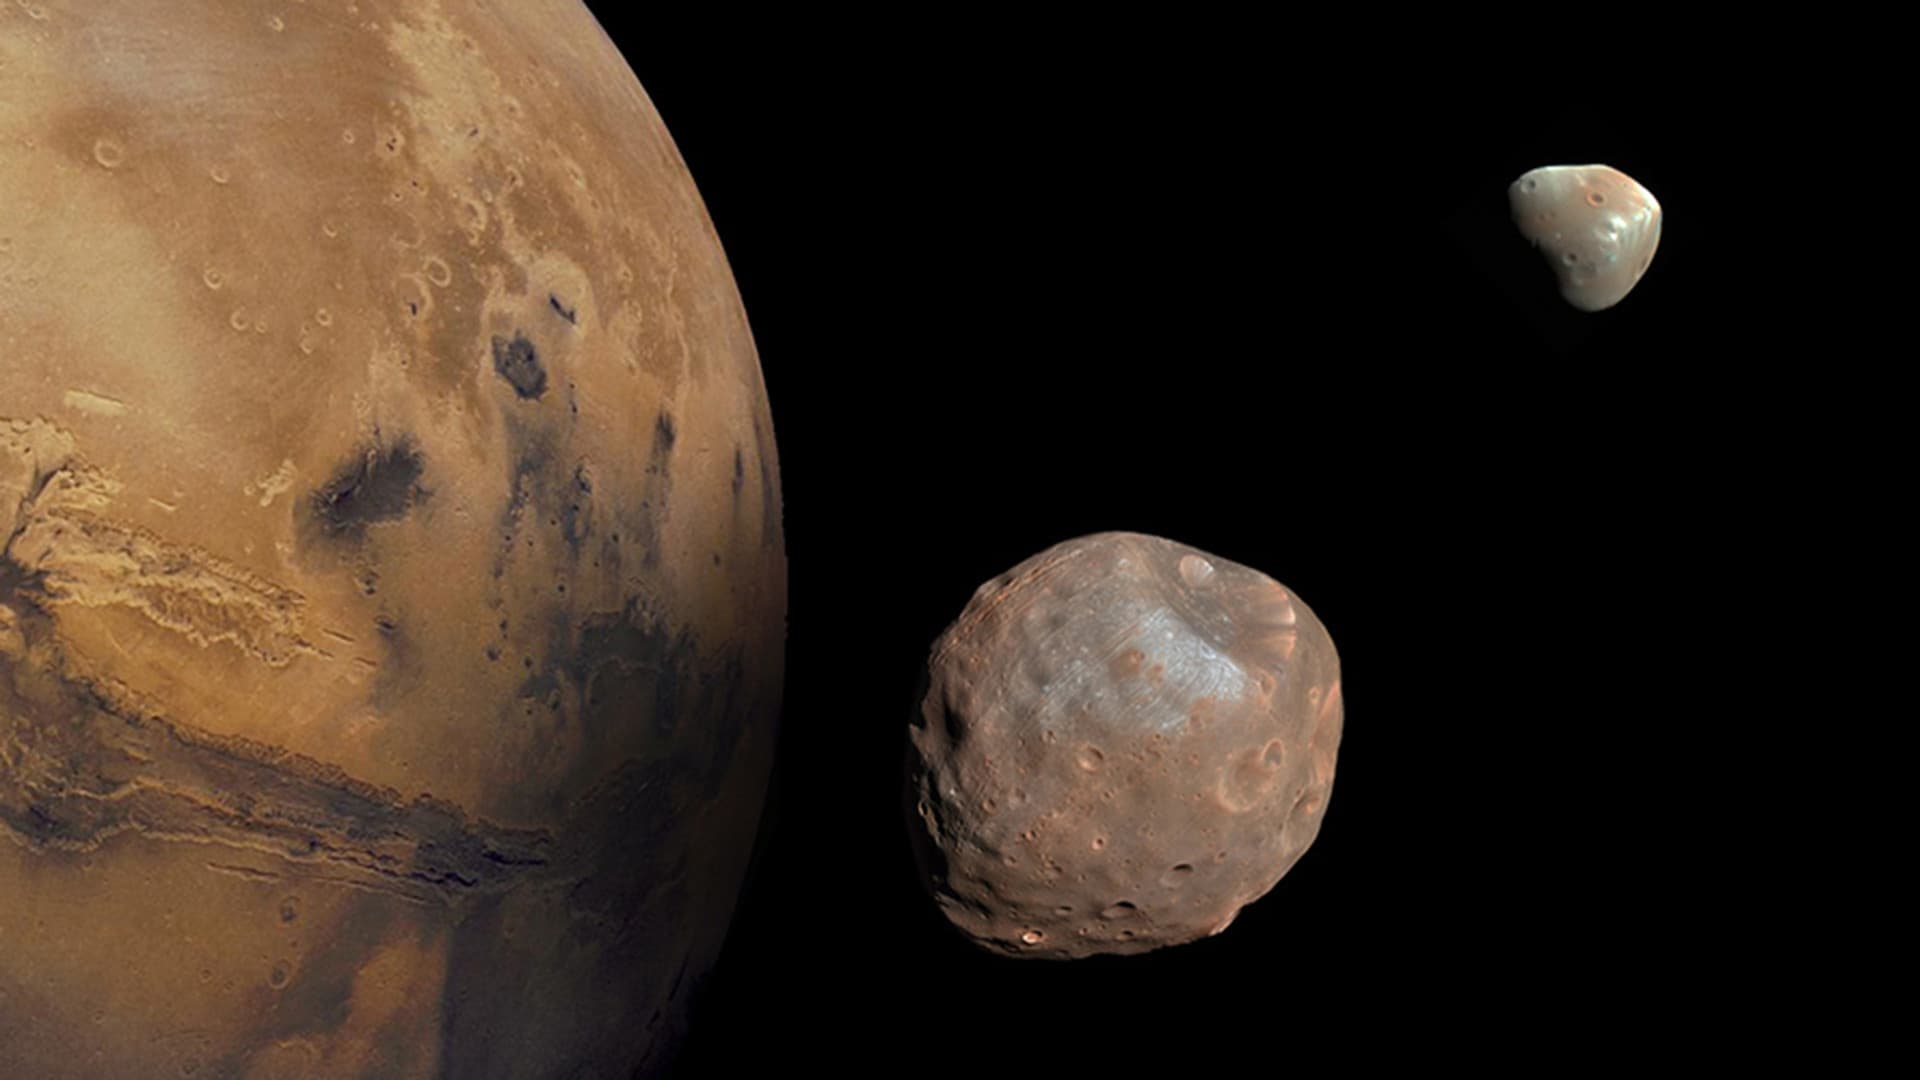 Mars' moons Phobos and Deimos